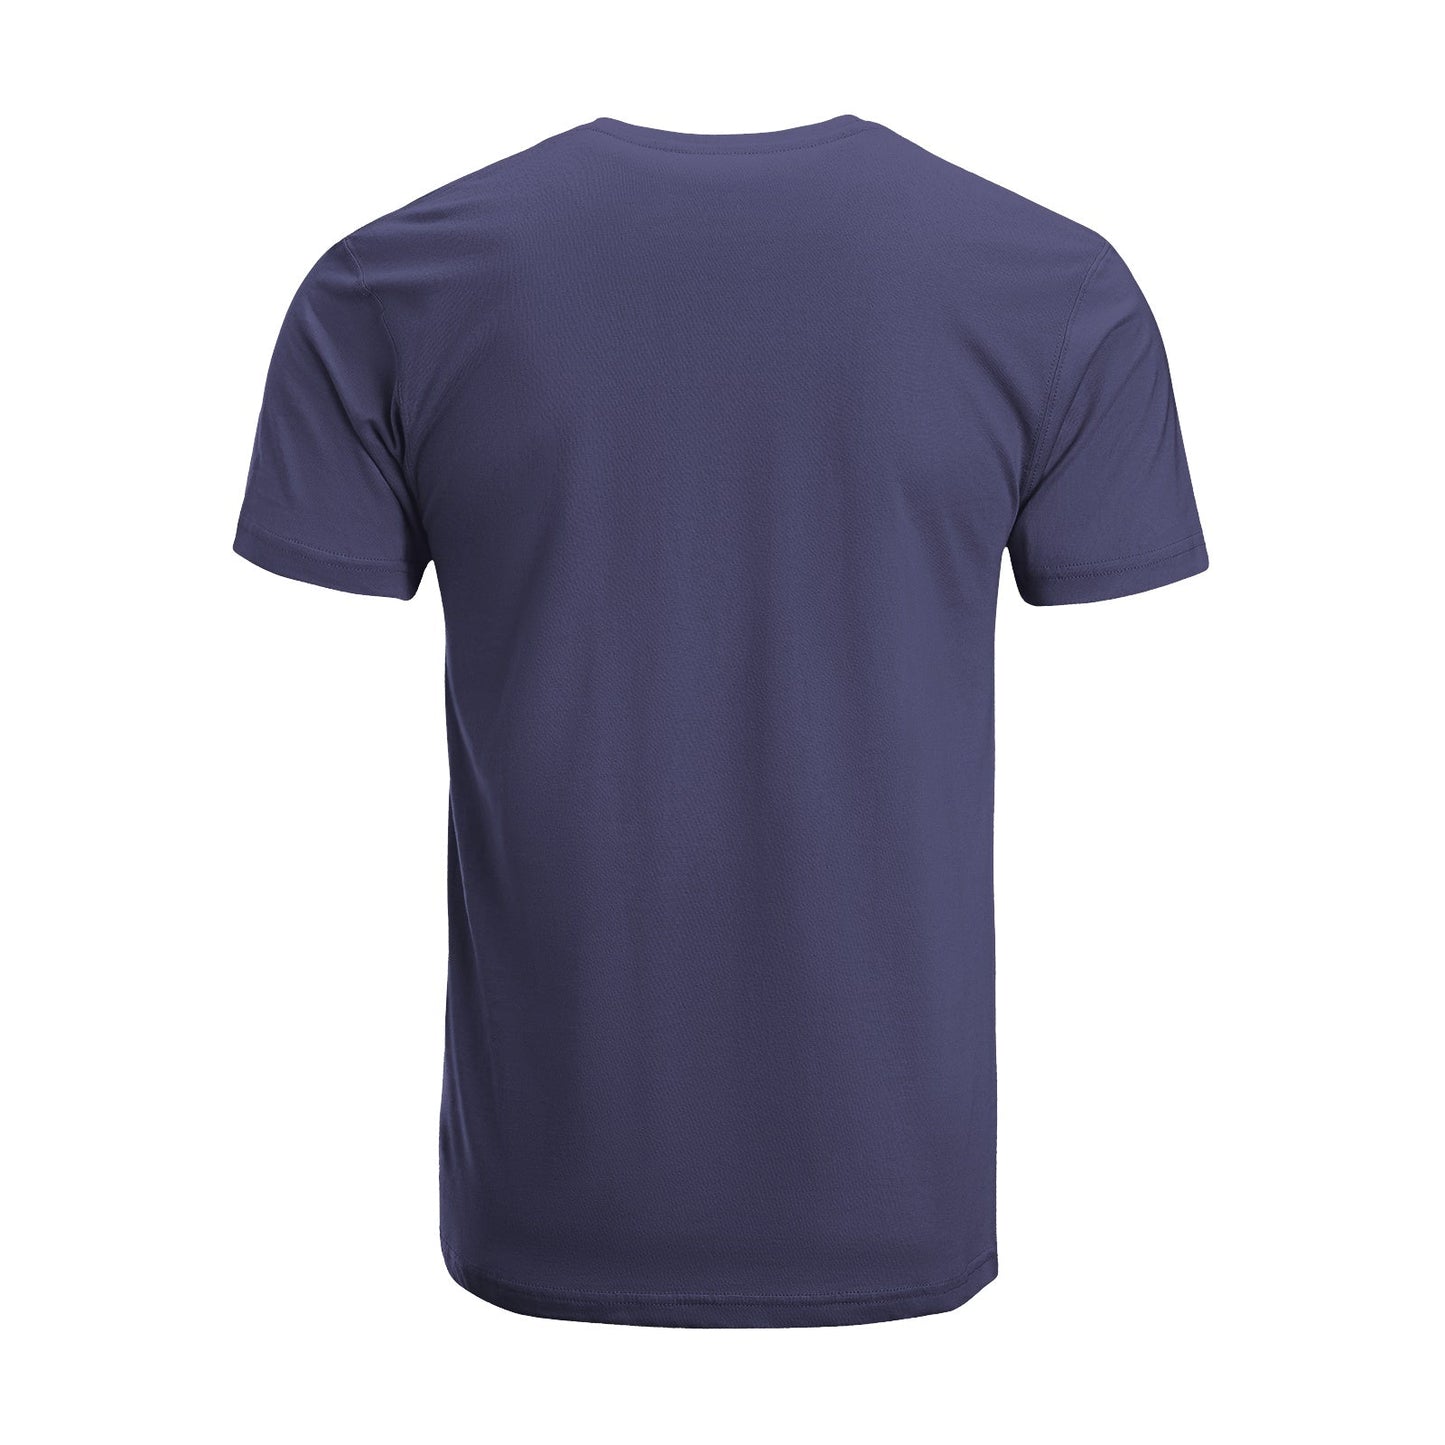 Unisex Short Sleeve Crew Neck Cotton Jersey T-Shirt CAT 49 - Tara-Outfits.com